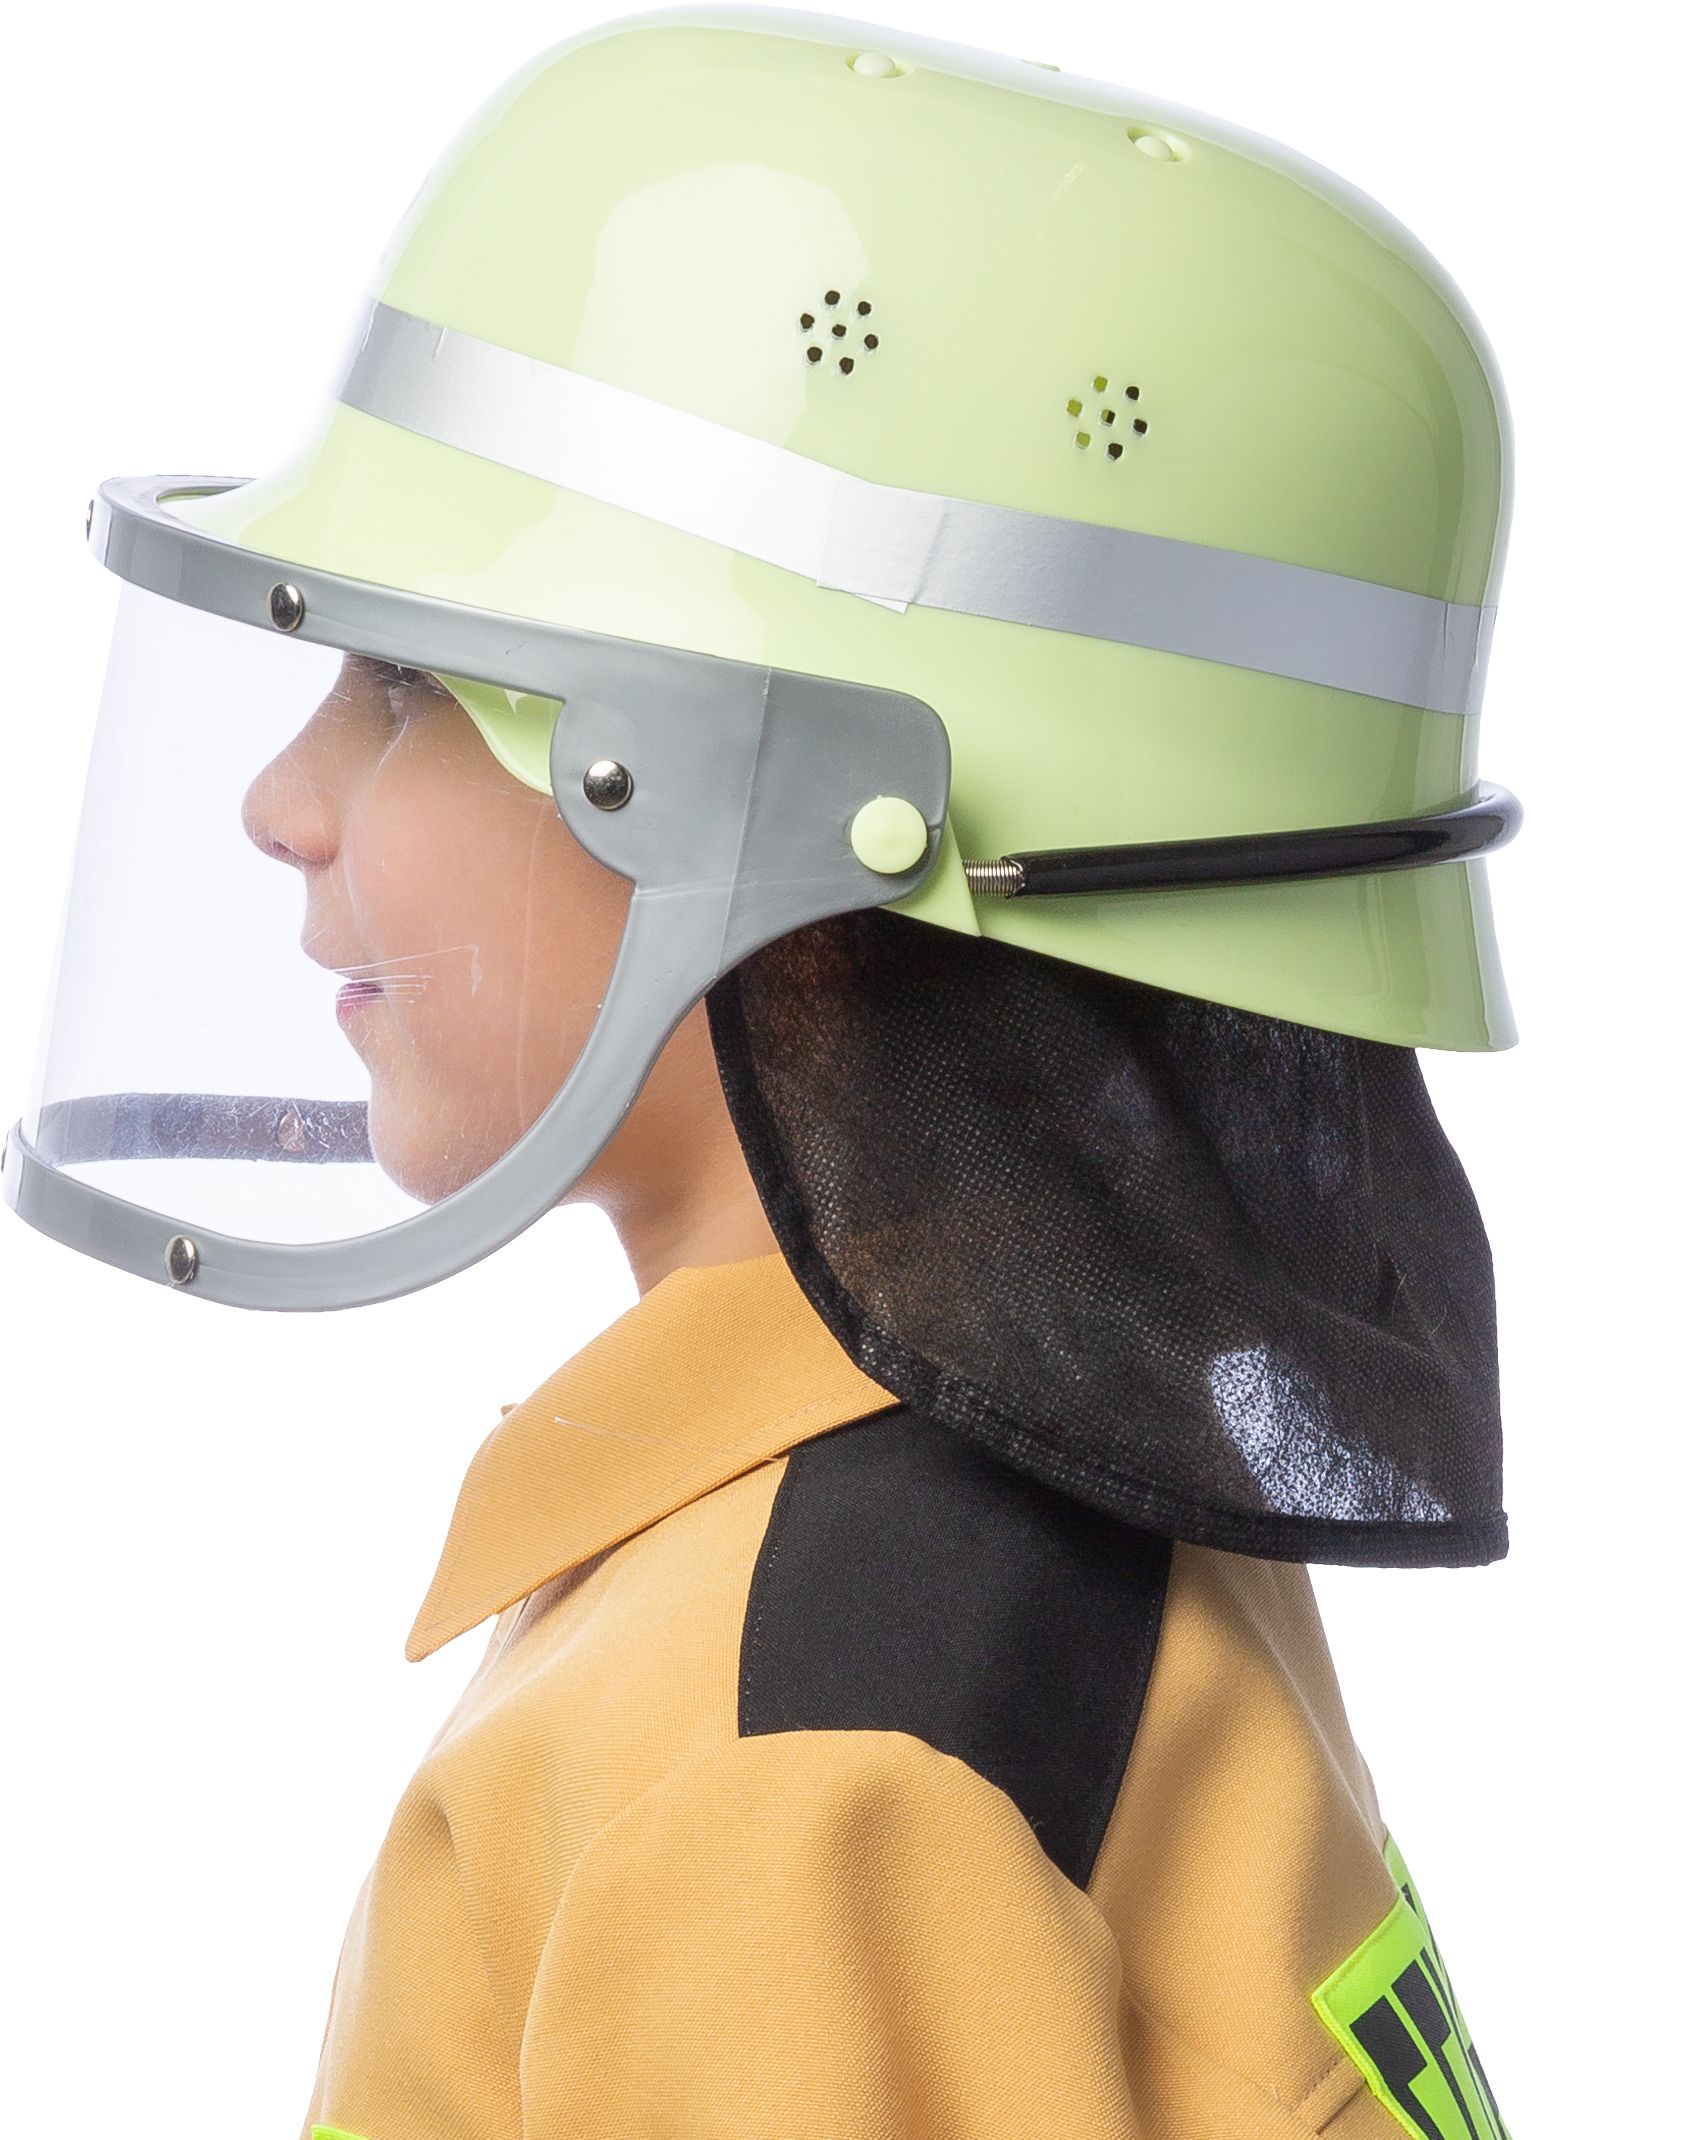 firefighter helmet classic, yellow 